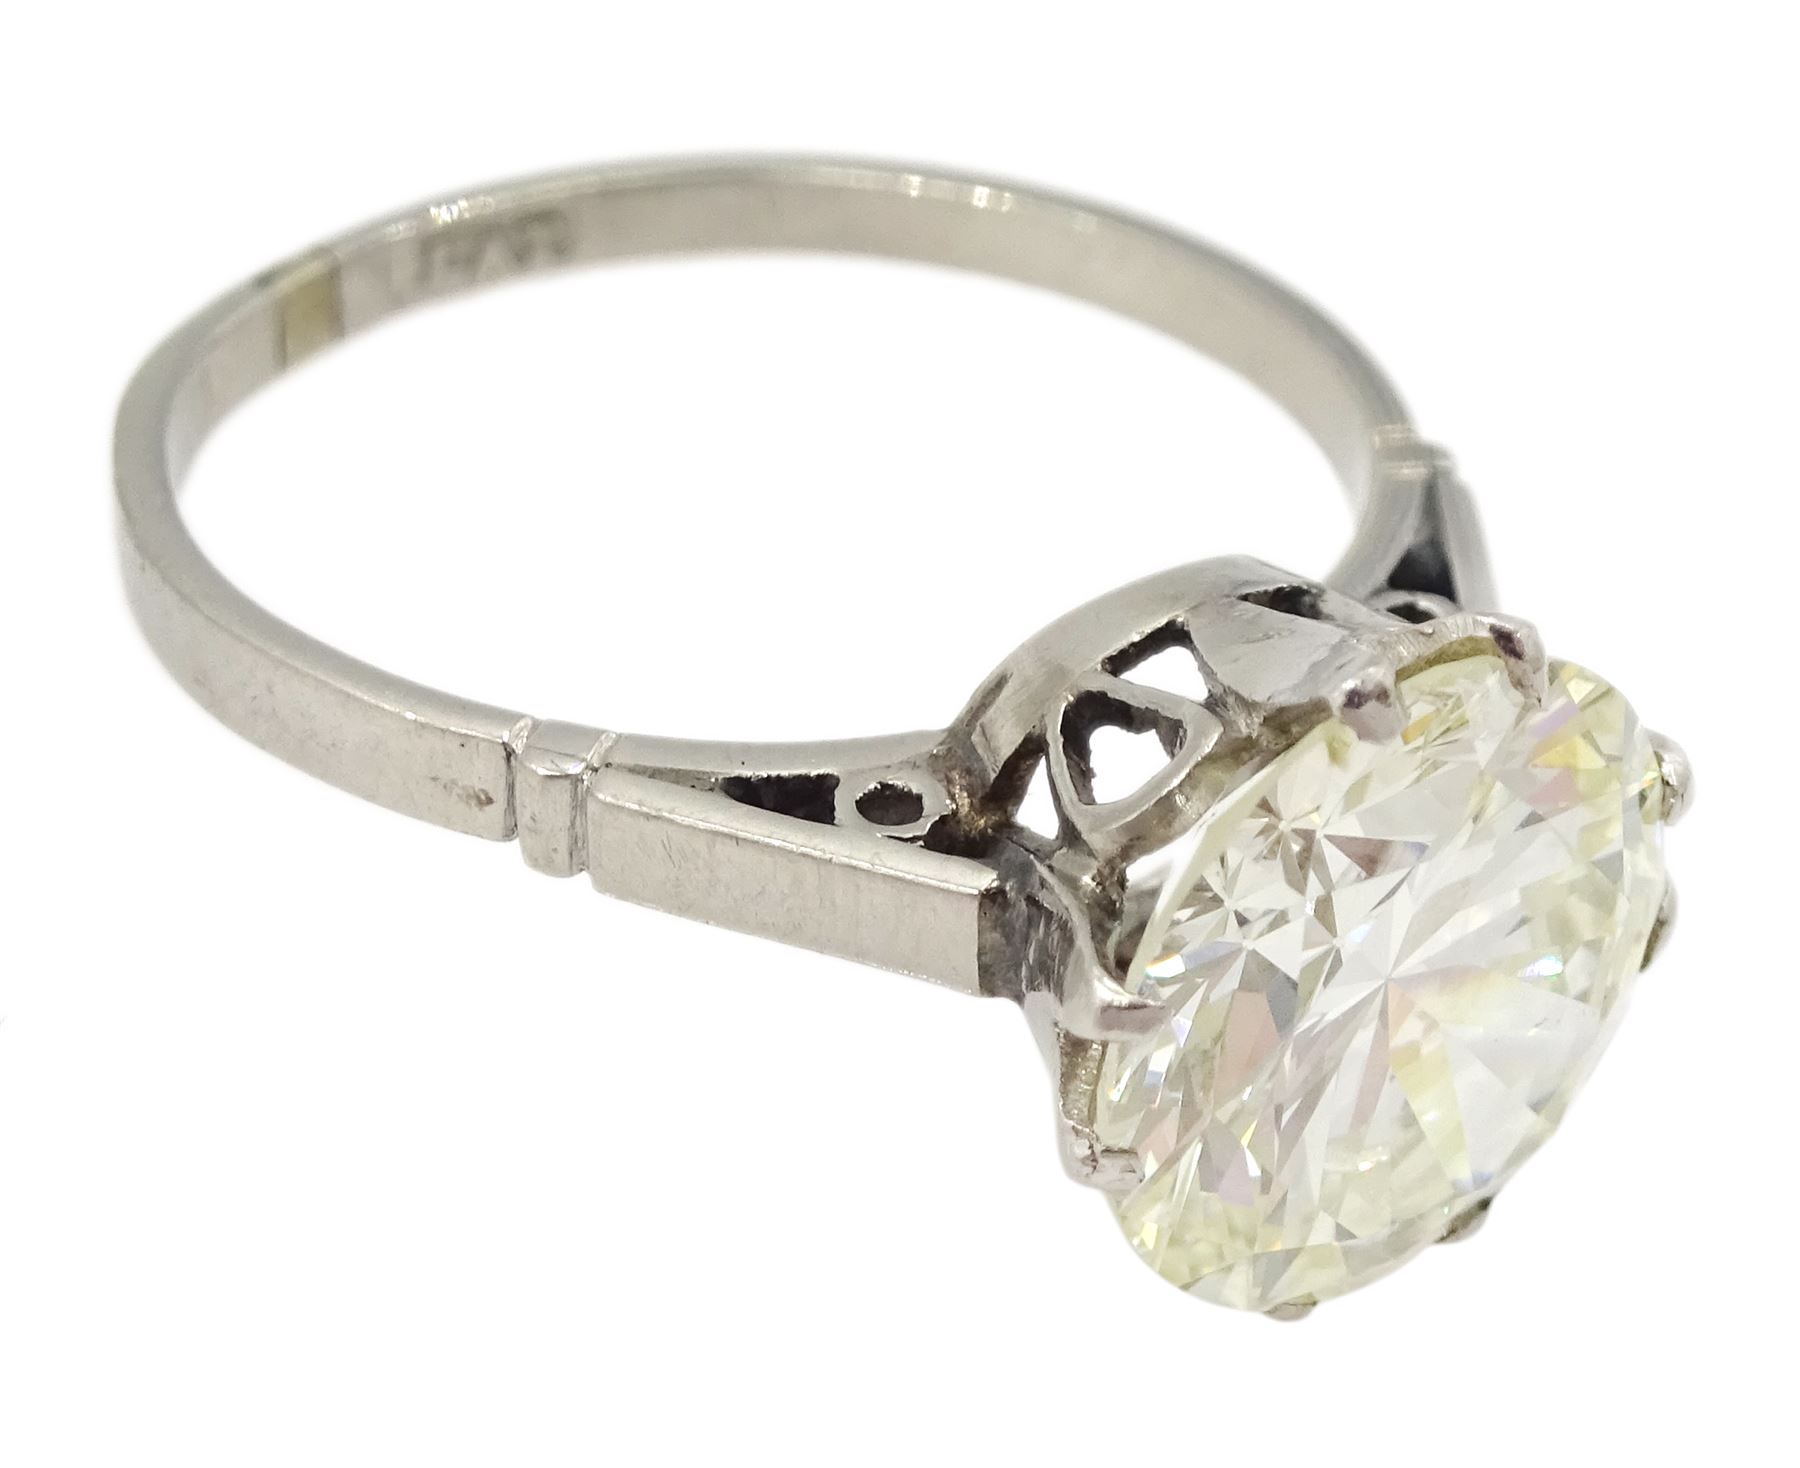 Platinum single stone round brilliant cut diamond ring - Image 3 of 4